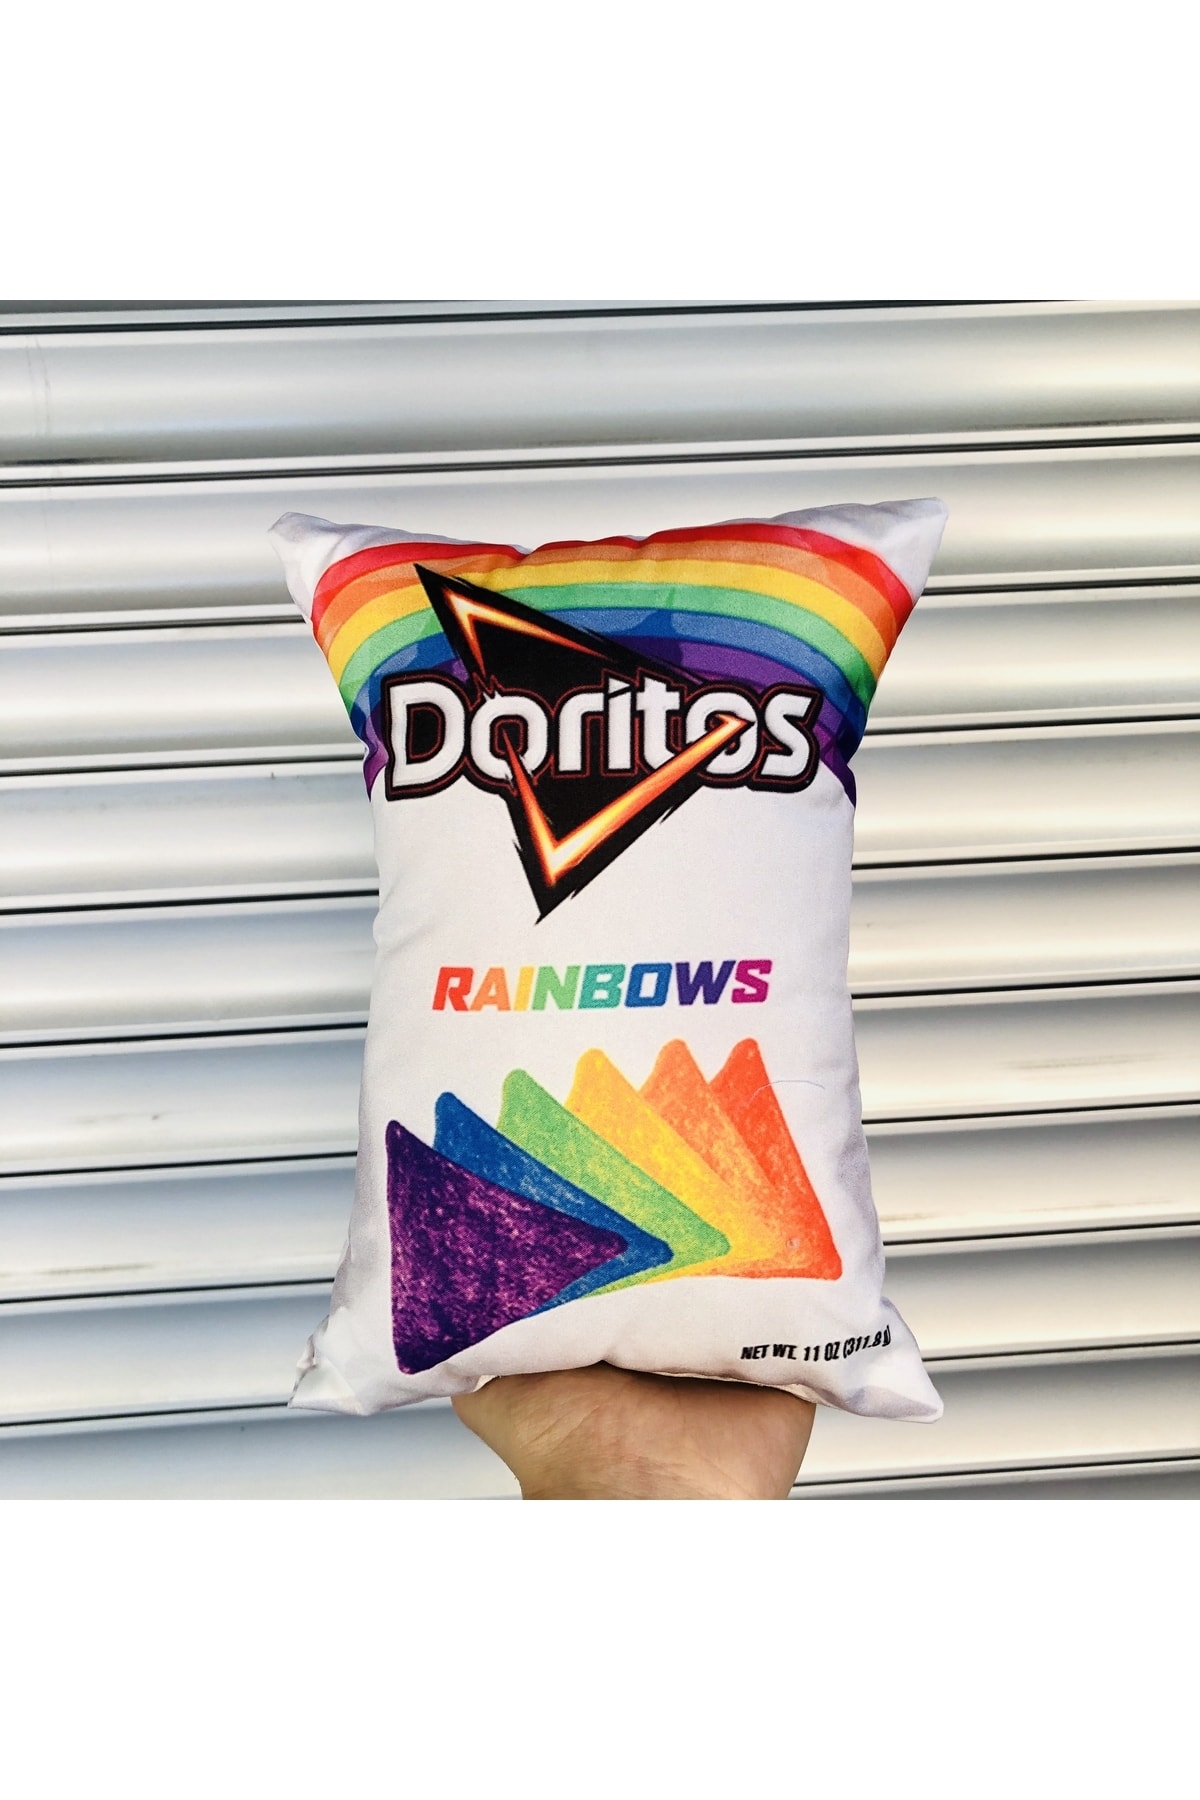 favorconsept Favoriconsept - Cips – Doritos Rainbow Yastık